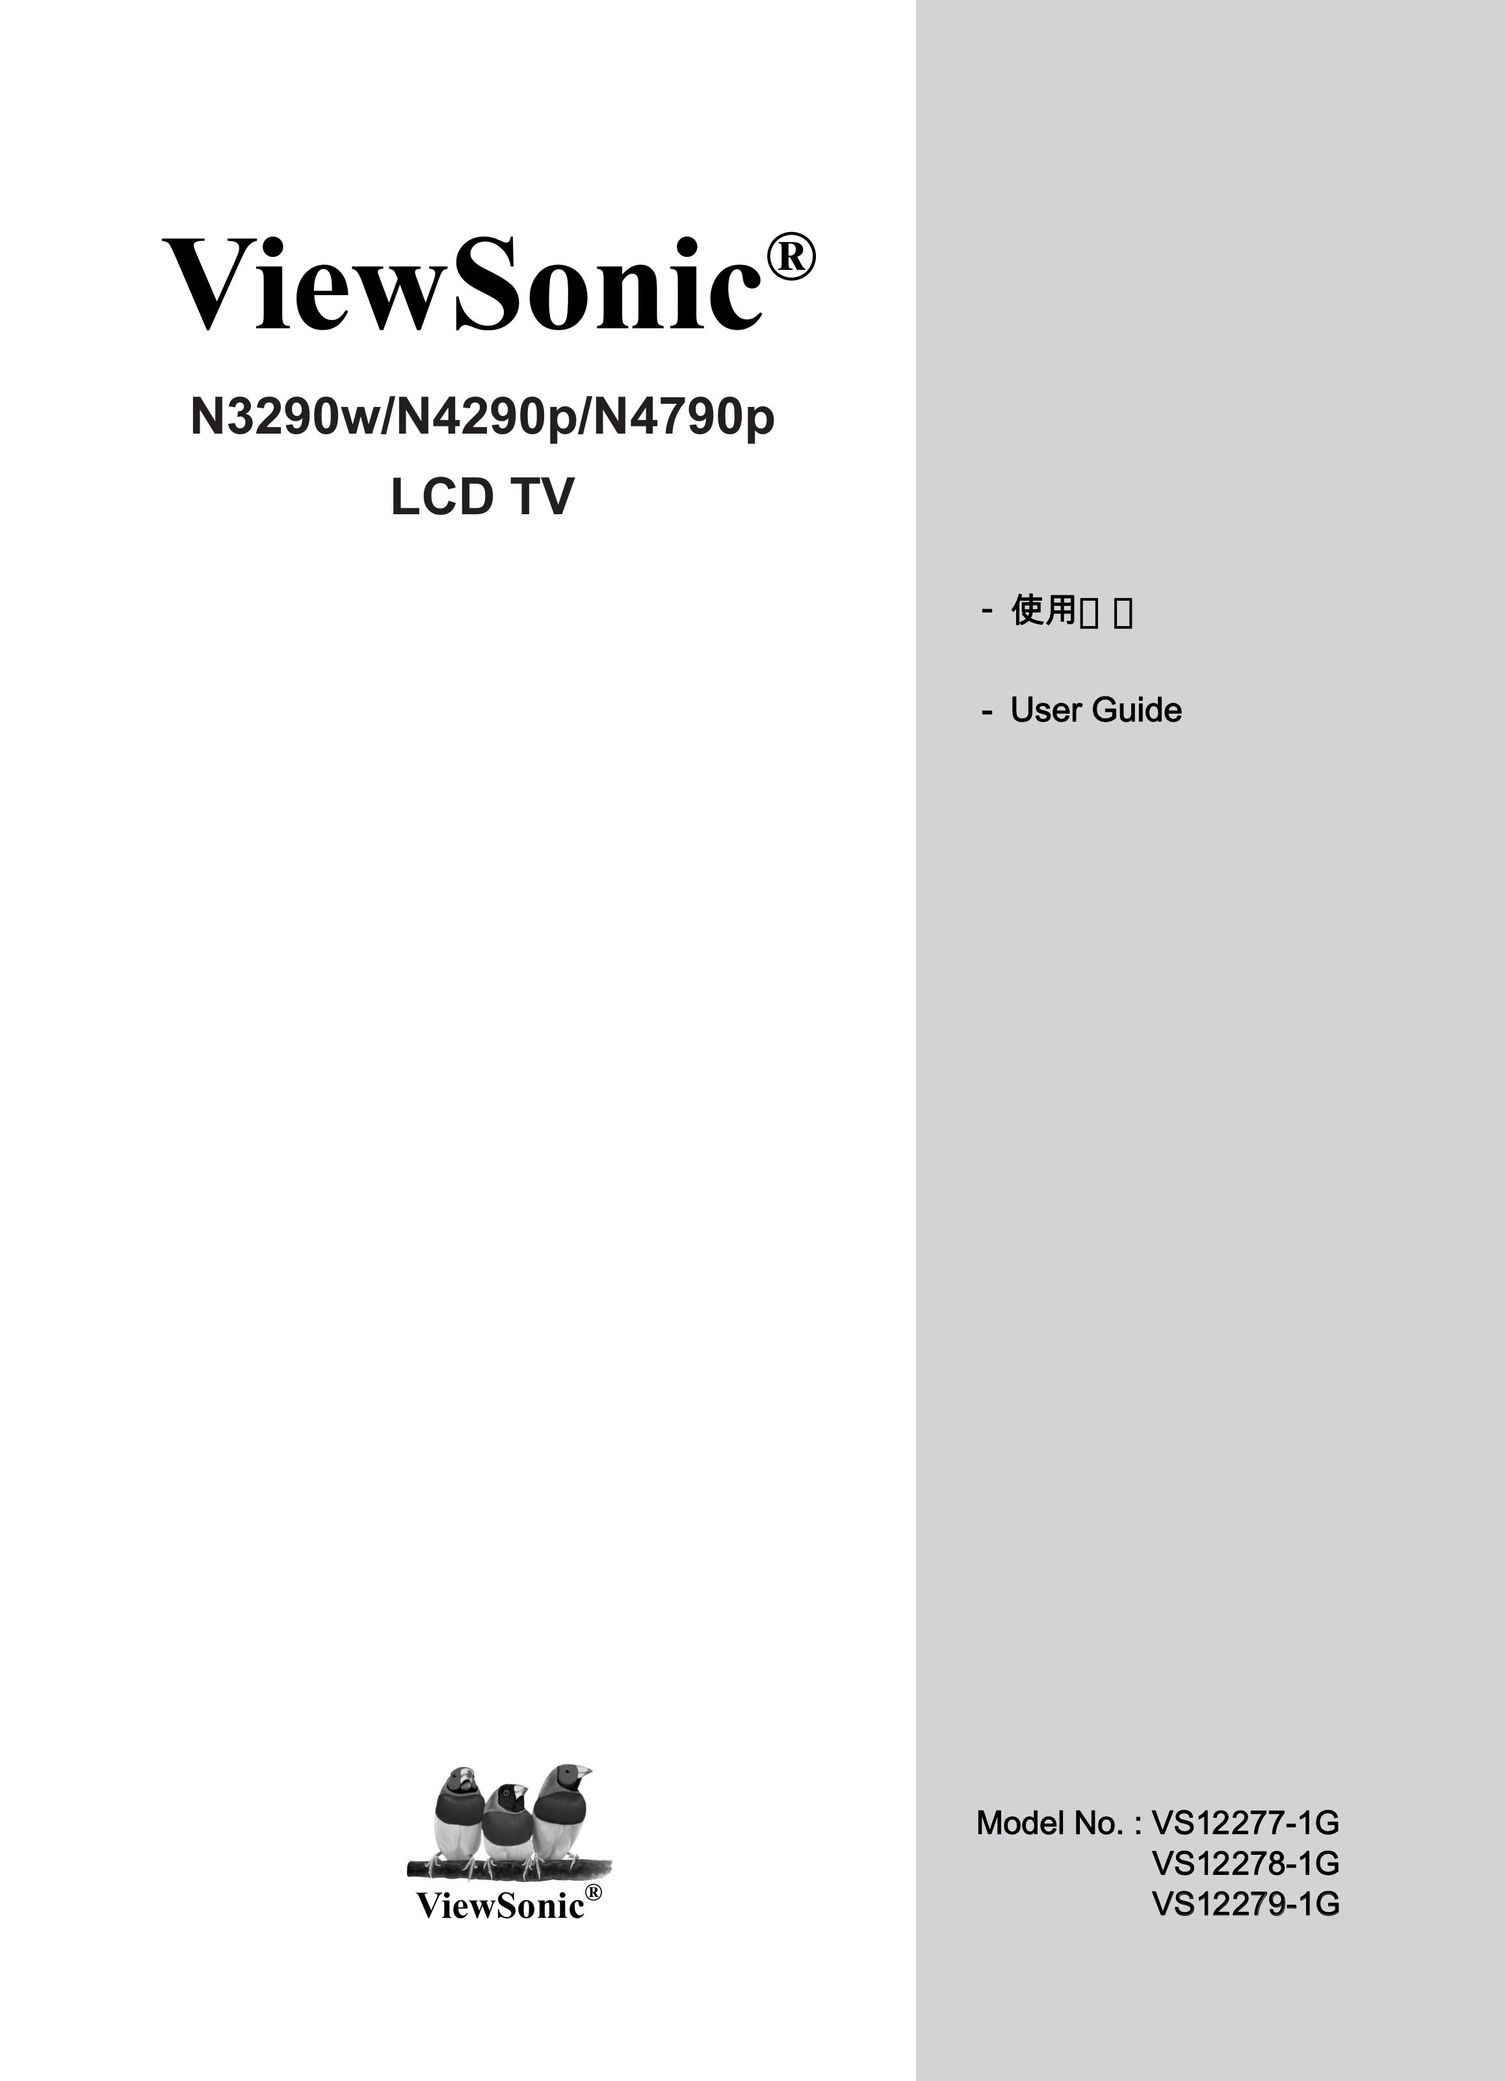 ViewSonic N4285p Flat Panel Television User Manual